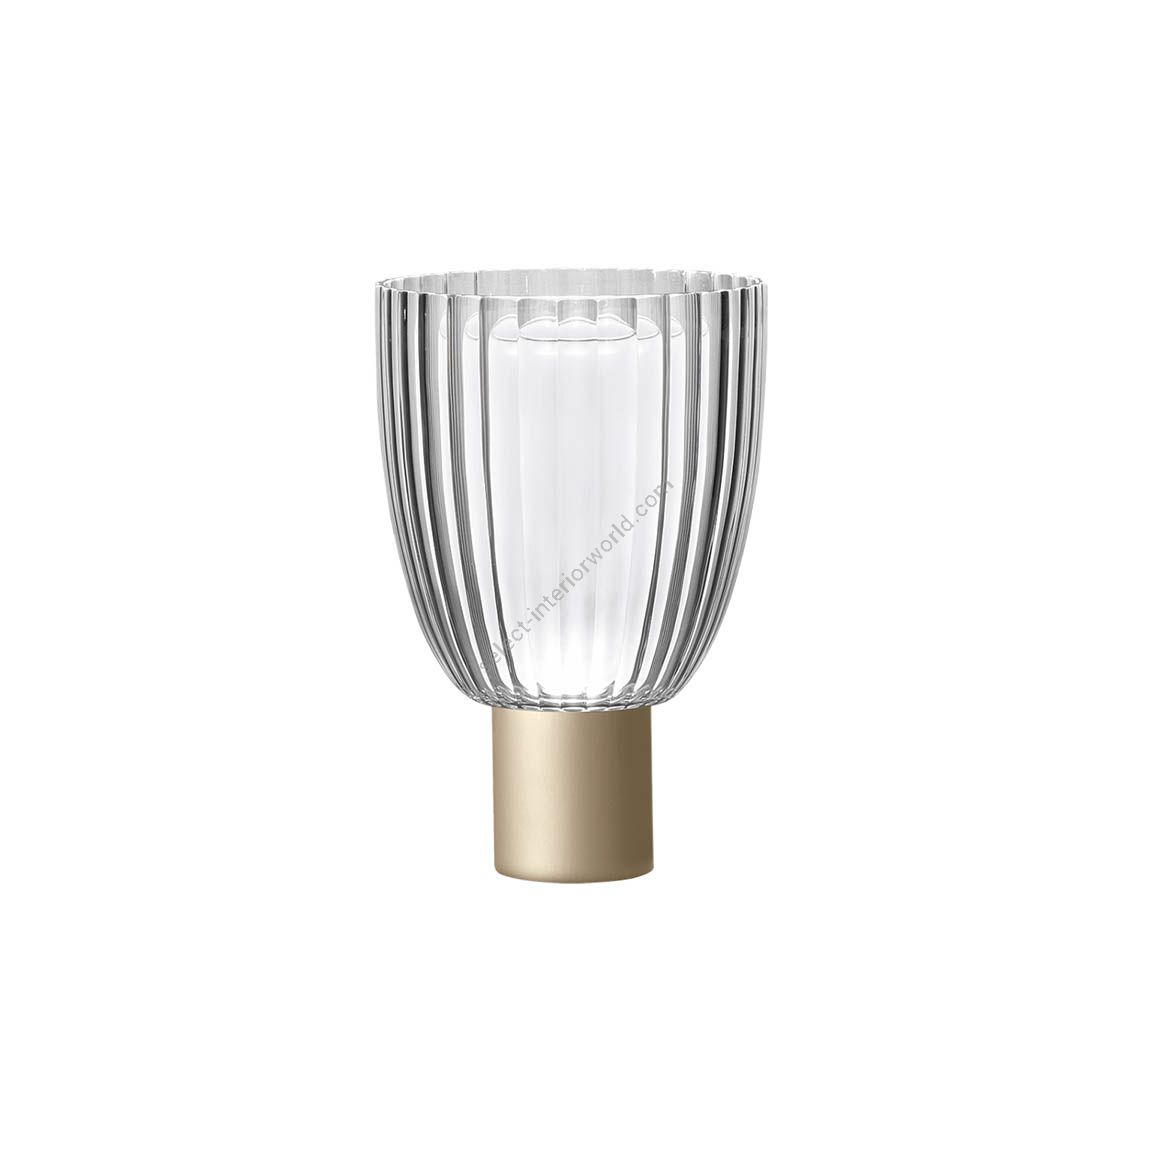 Italamp / Table Lamp / Universale 8148/LG